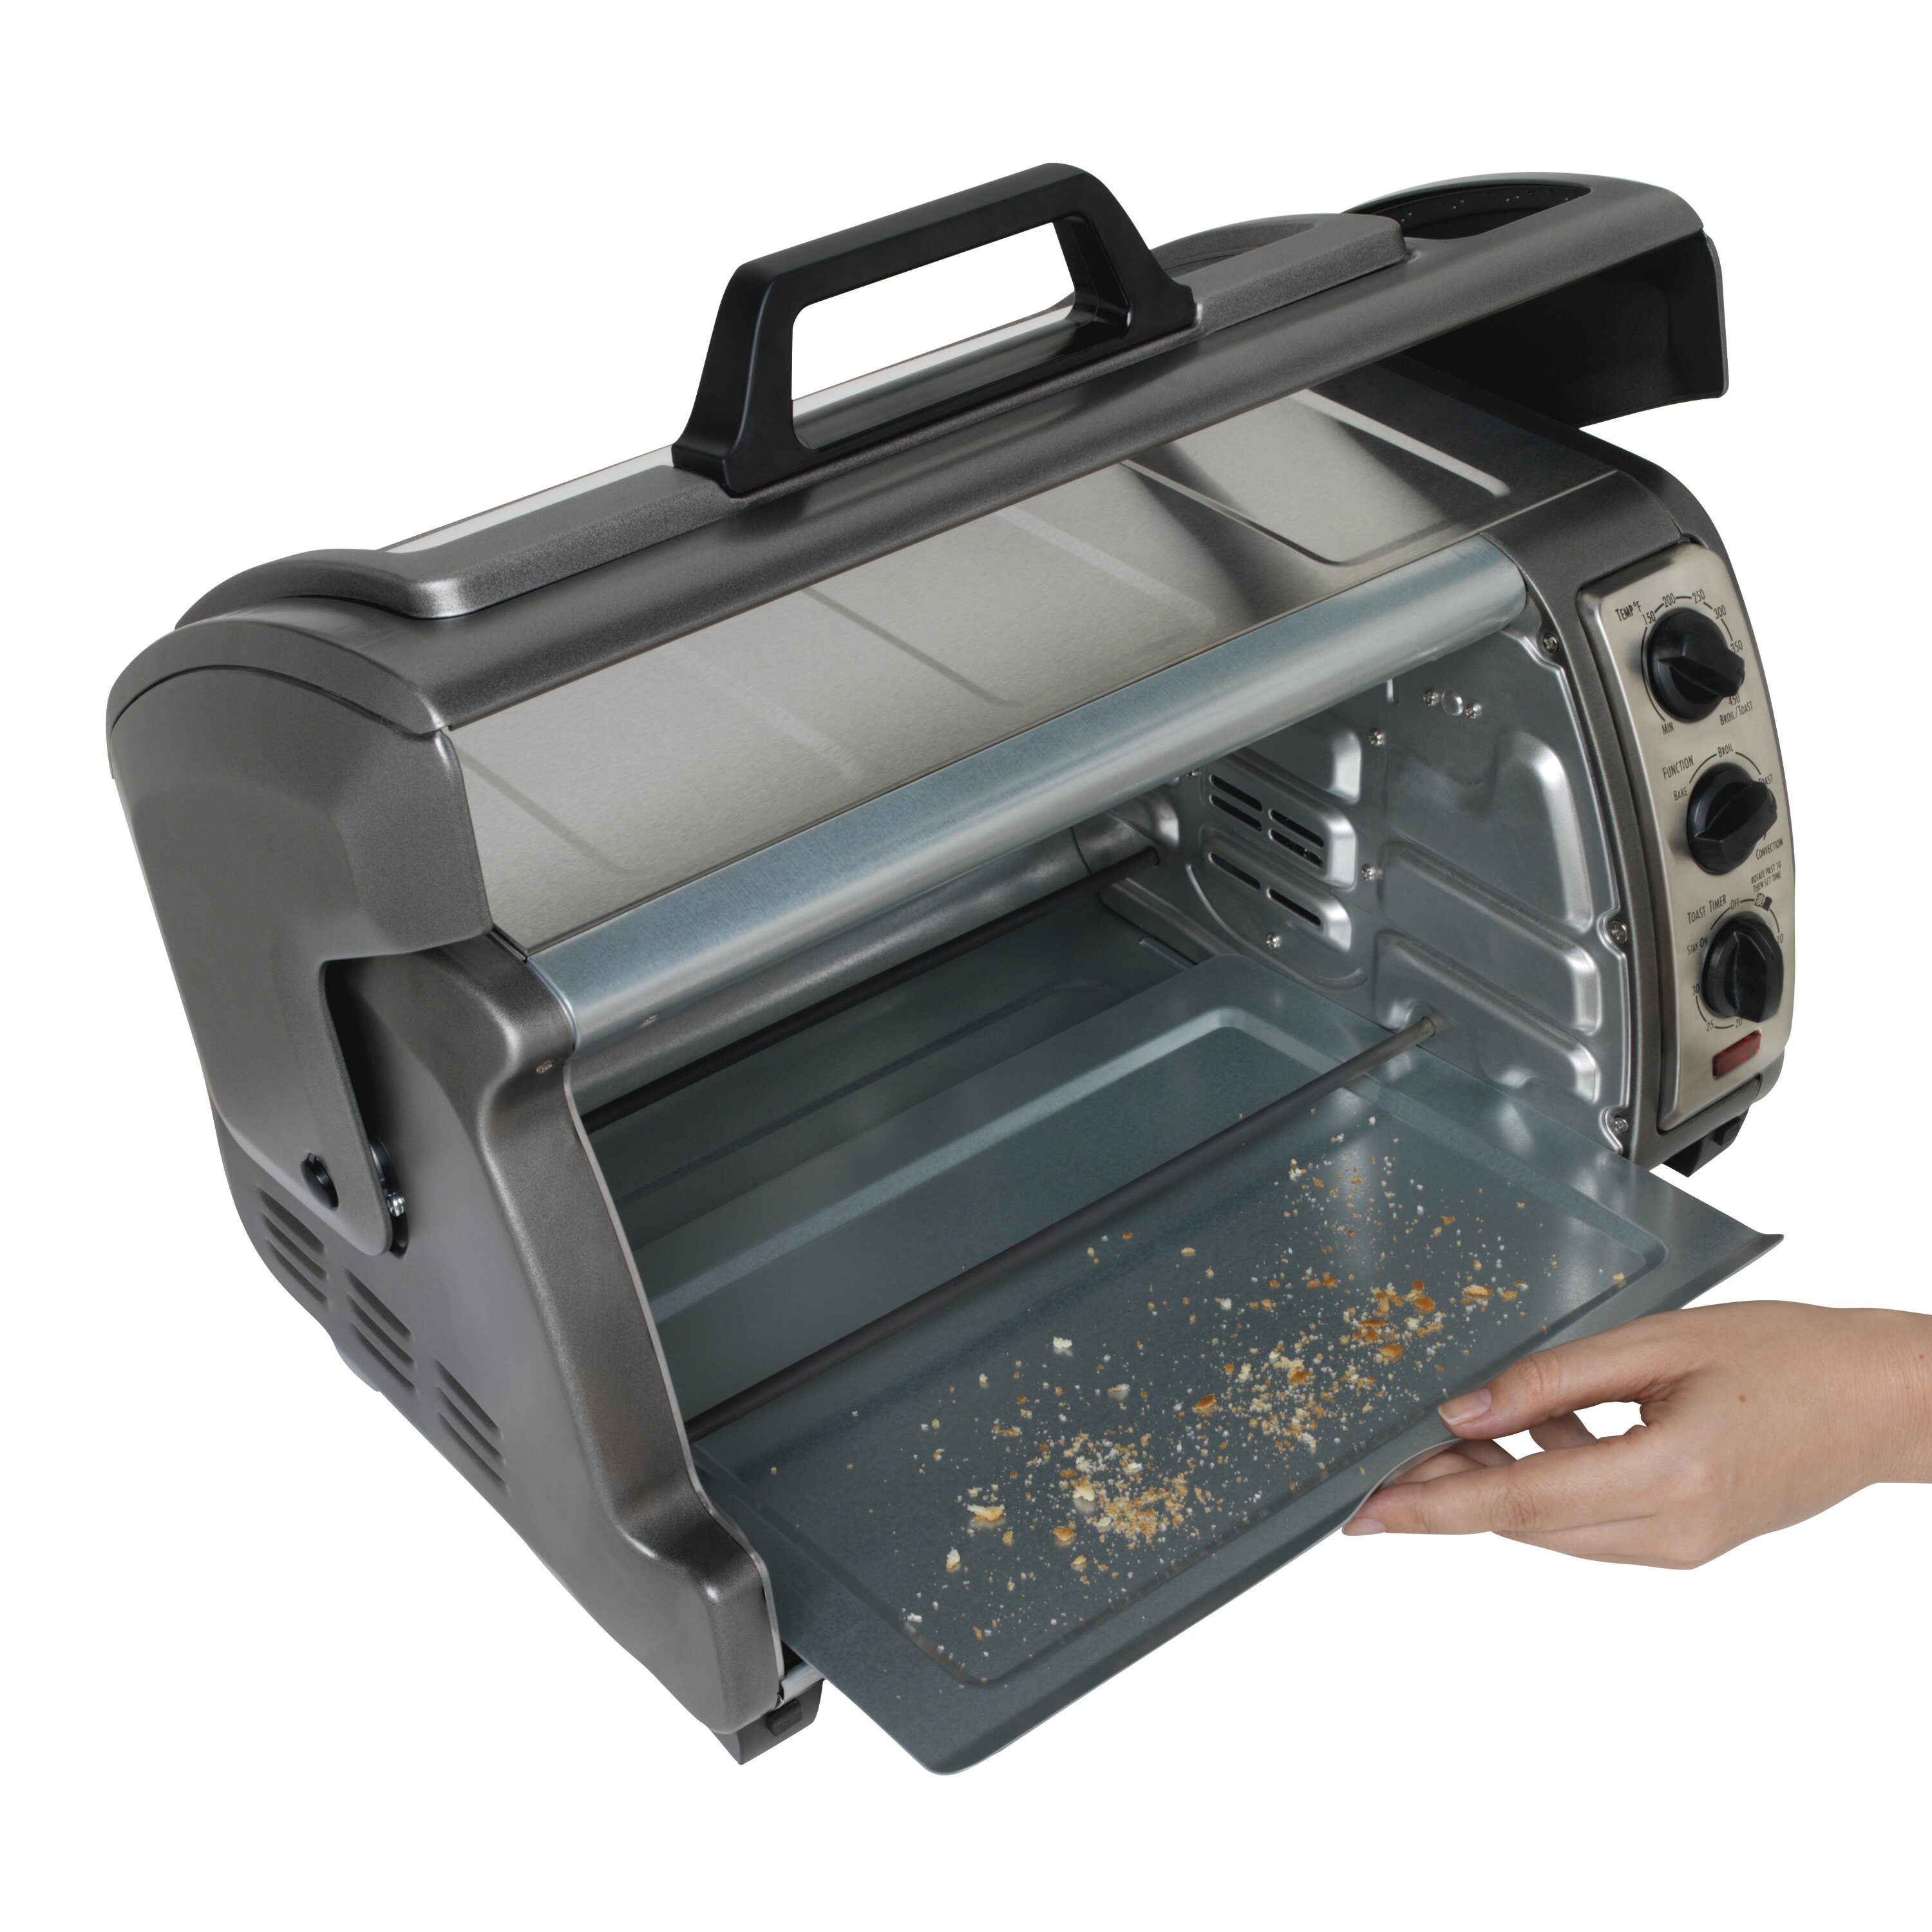 Hamilton Beach Easy Reach Toaster Oven with Convection & Reviews | Wayfair